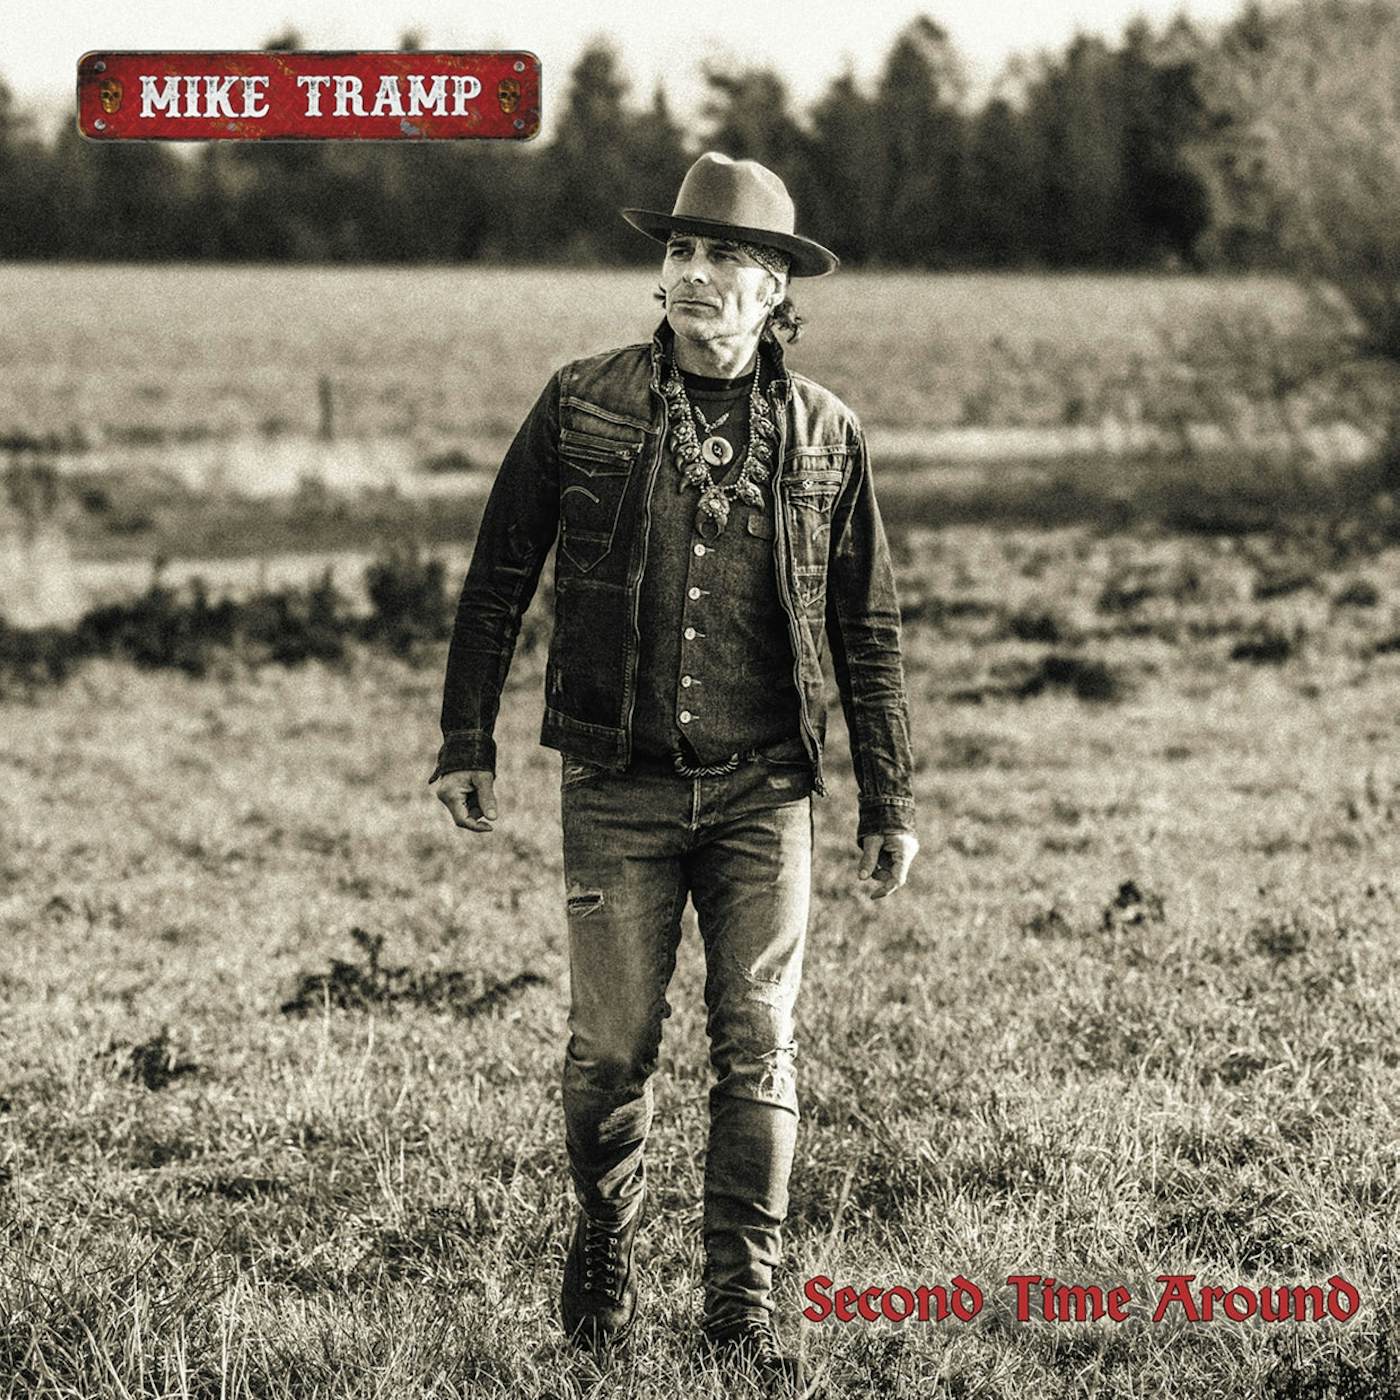 Mike Tramp LP - Second Time Around (Ltd Red Vinyl Version)